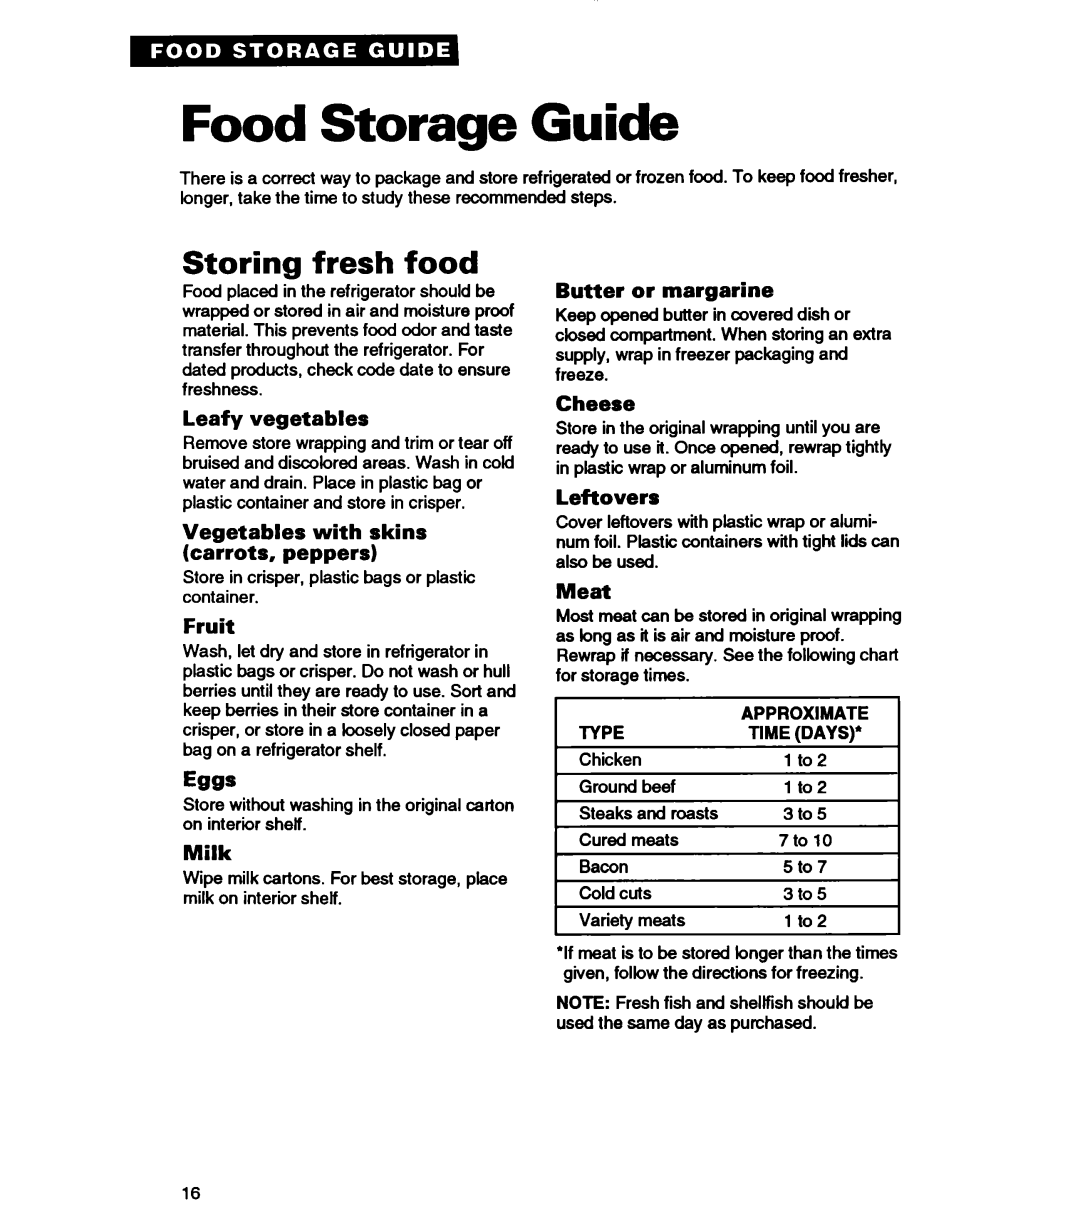 Whirlpool RT14VK Food Storage Guide, Storing fresh food, Leafy vegetables, Vegetables with skins carrots, peppers, Fruit 